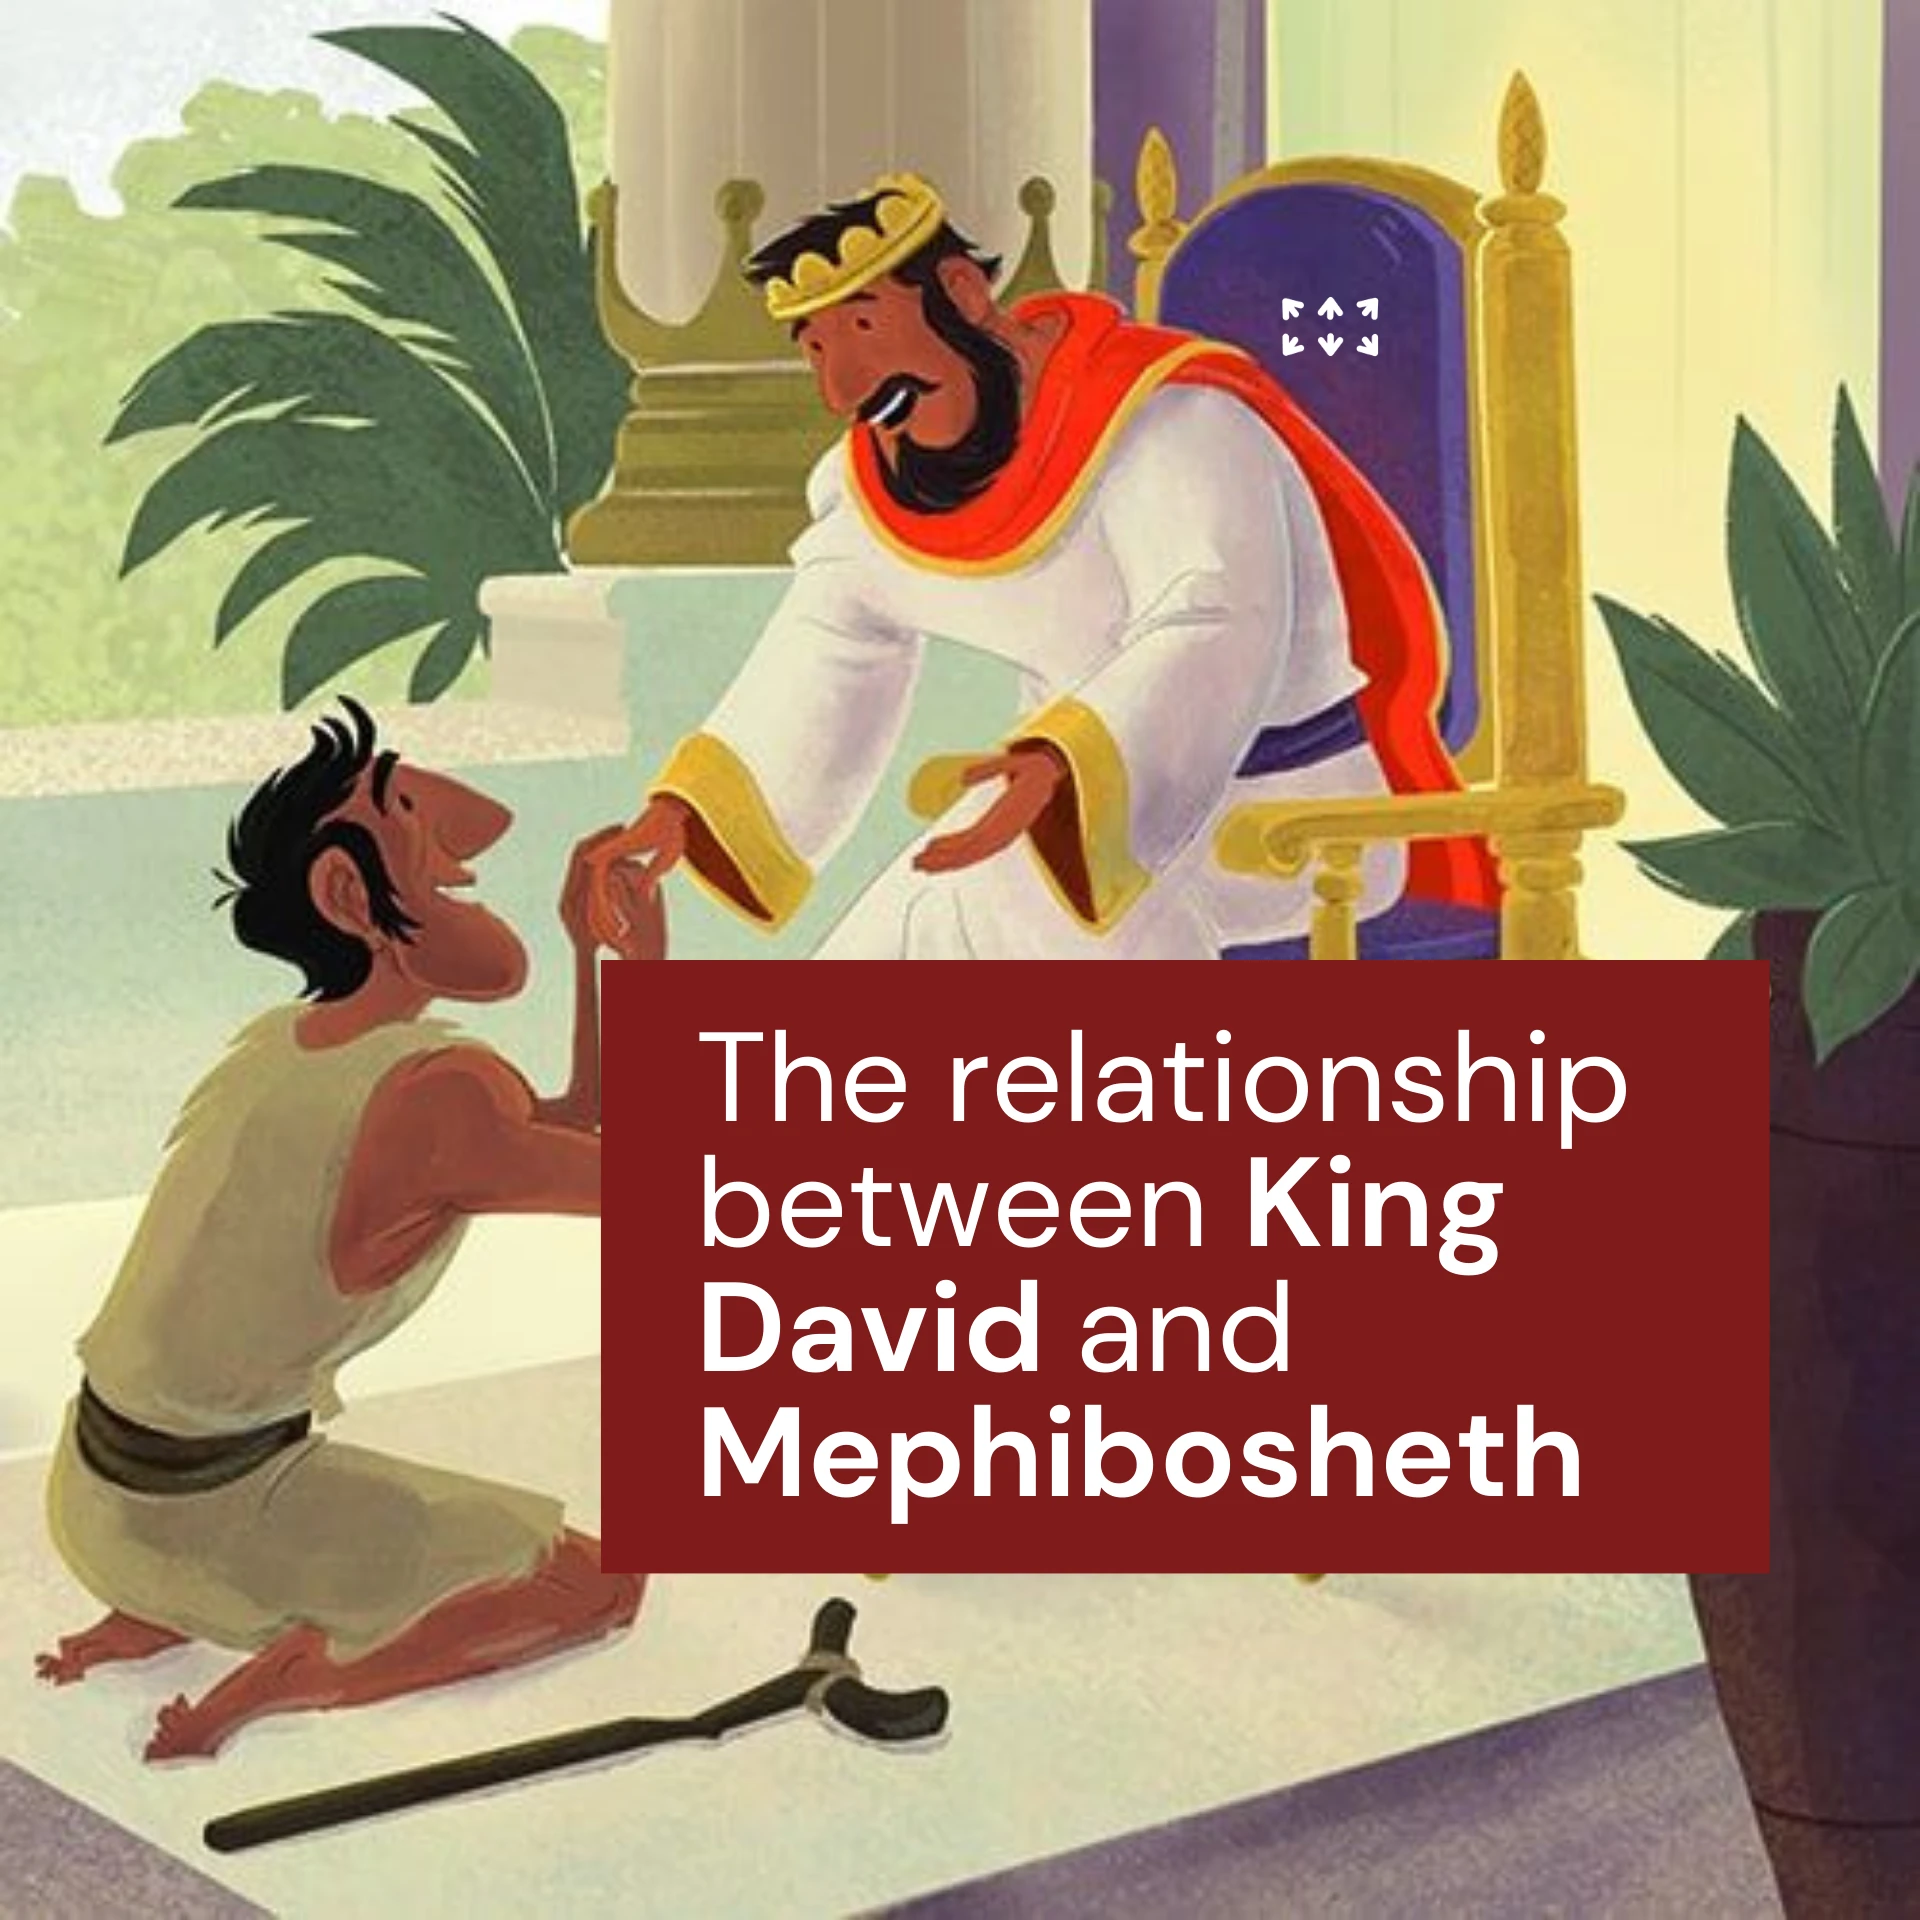 The relationship between King David and Mephibosheth